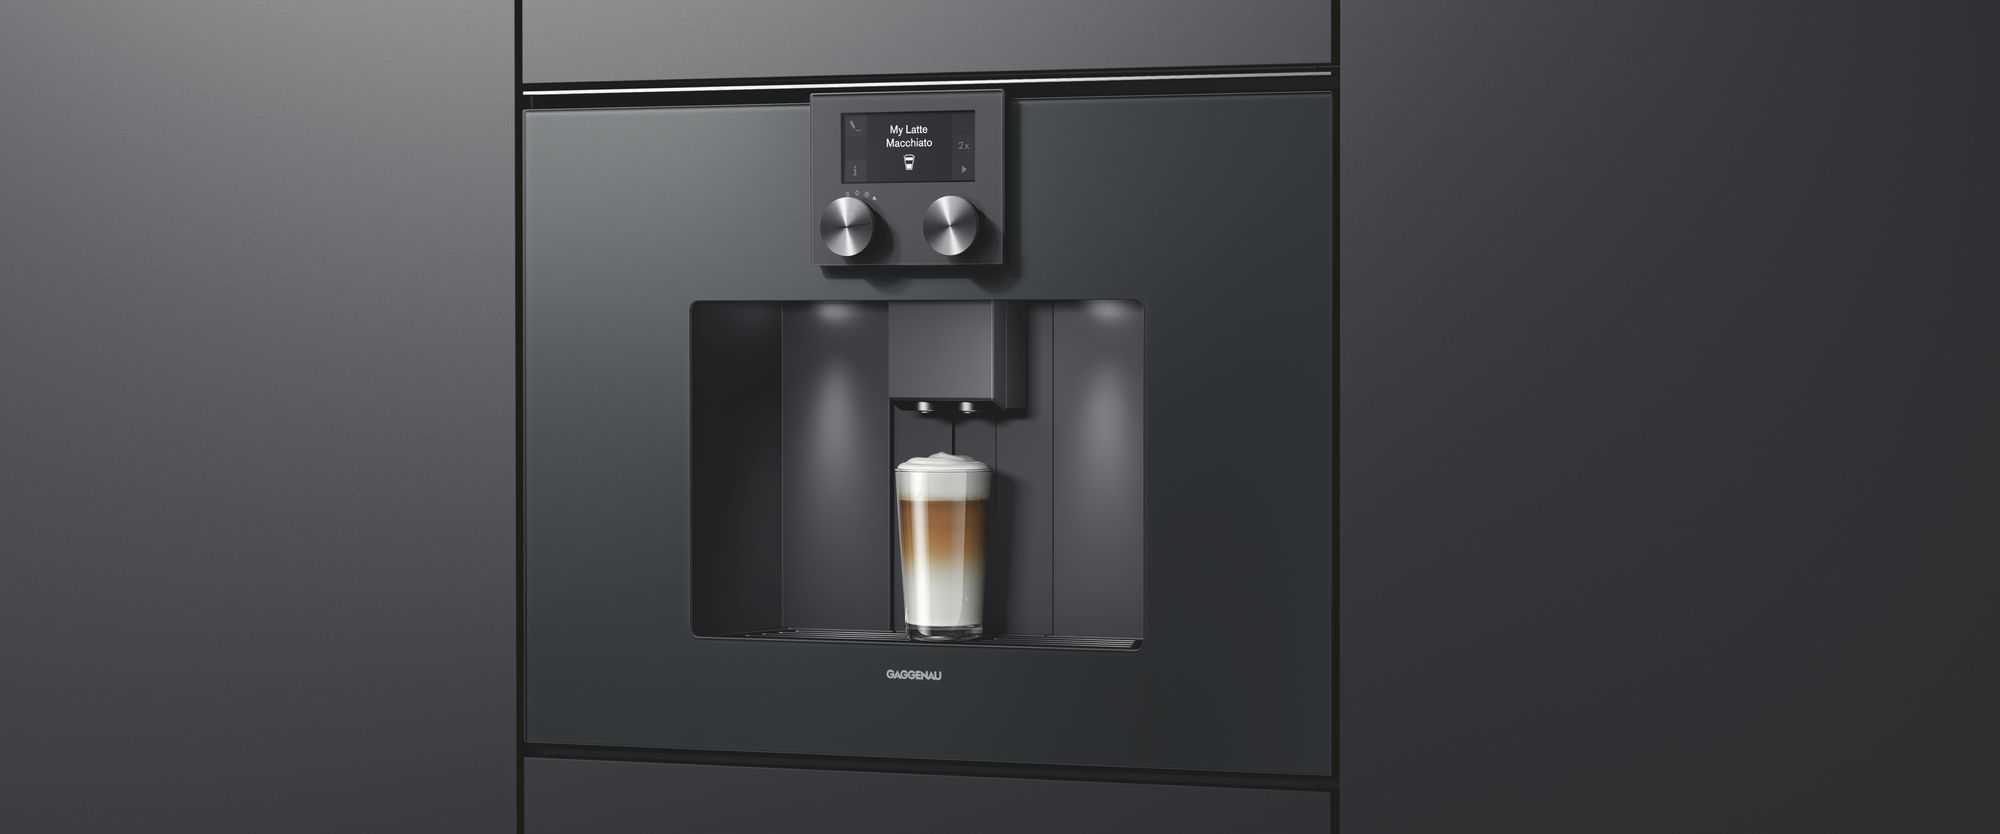 Gaggenau 400 Series Coffee Machines by FCI London